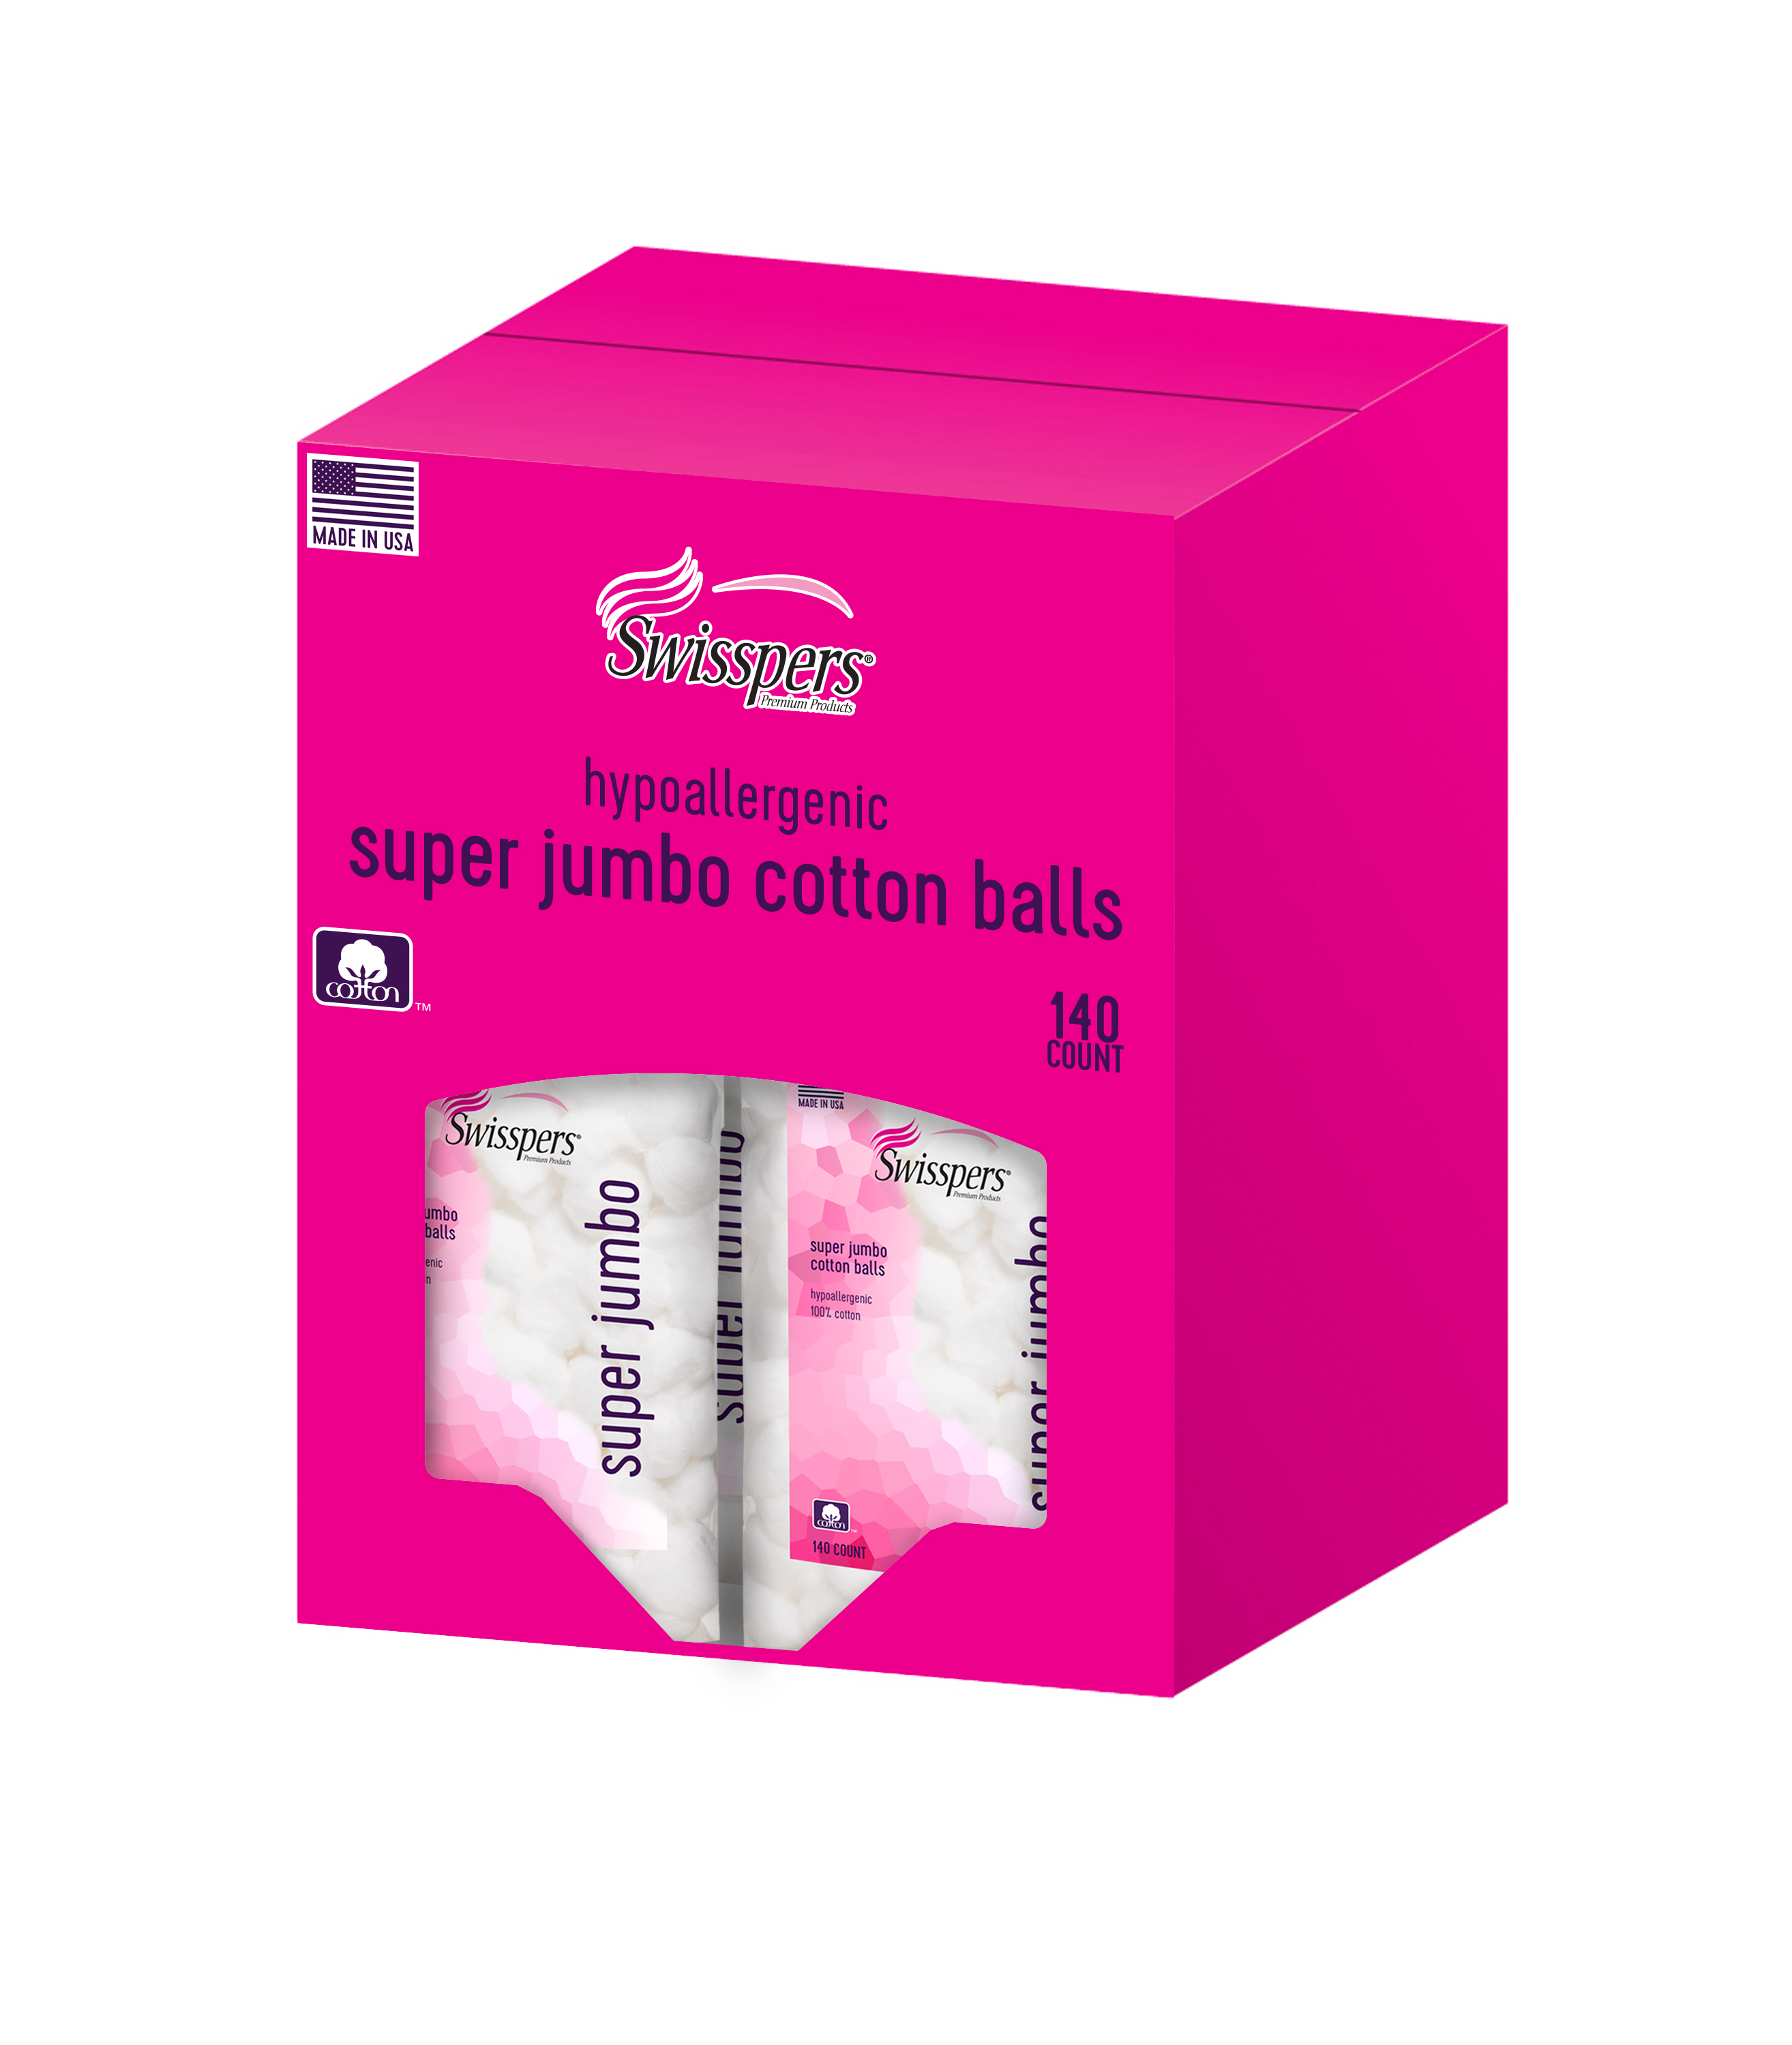 Swisspers 140ct, 100% cotton, white, Premium Hypoallergenic Super Jumbo Cotton Balls - image 2 of 4